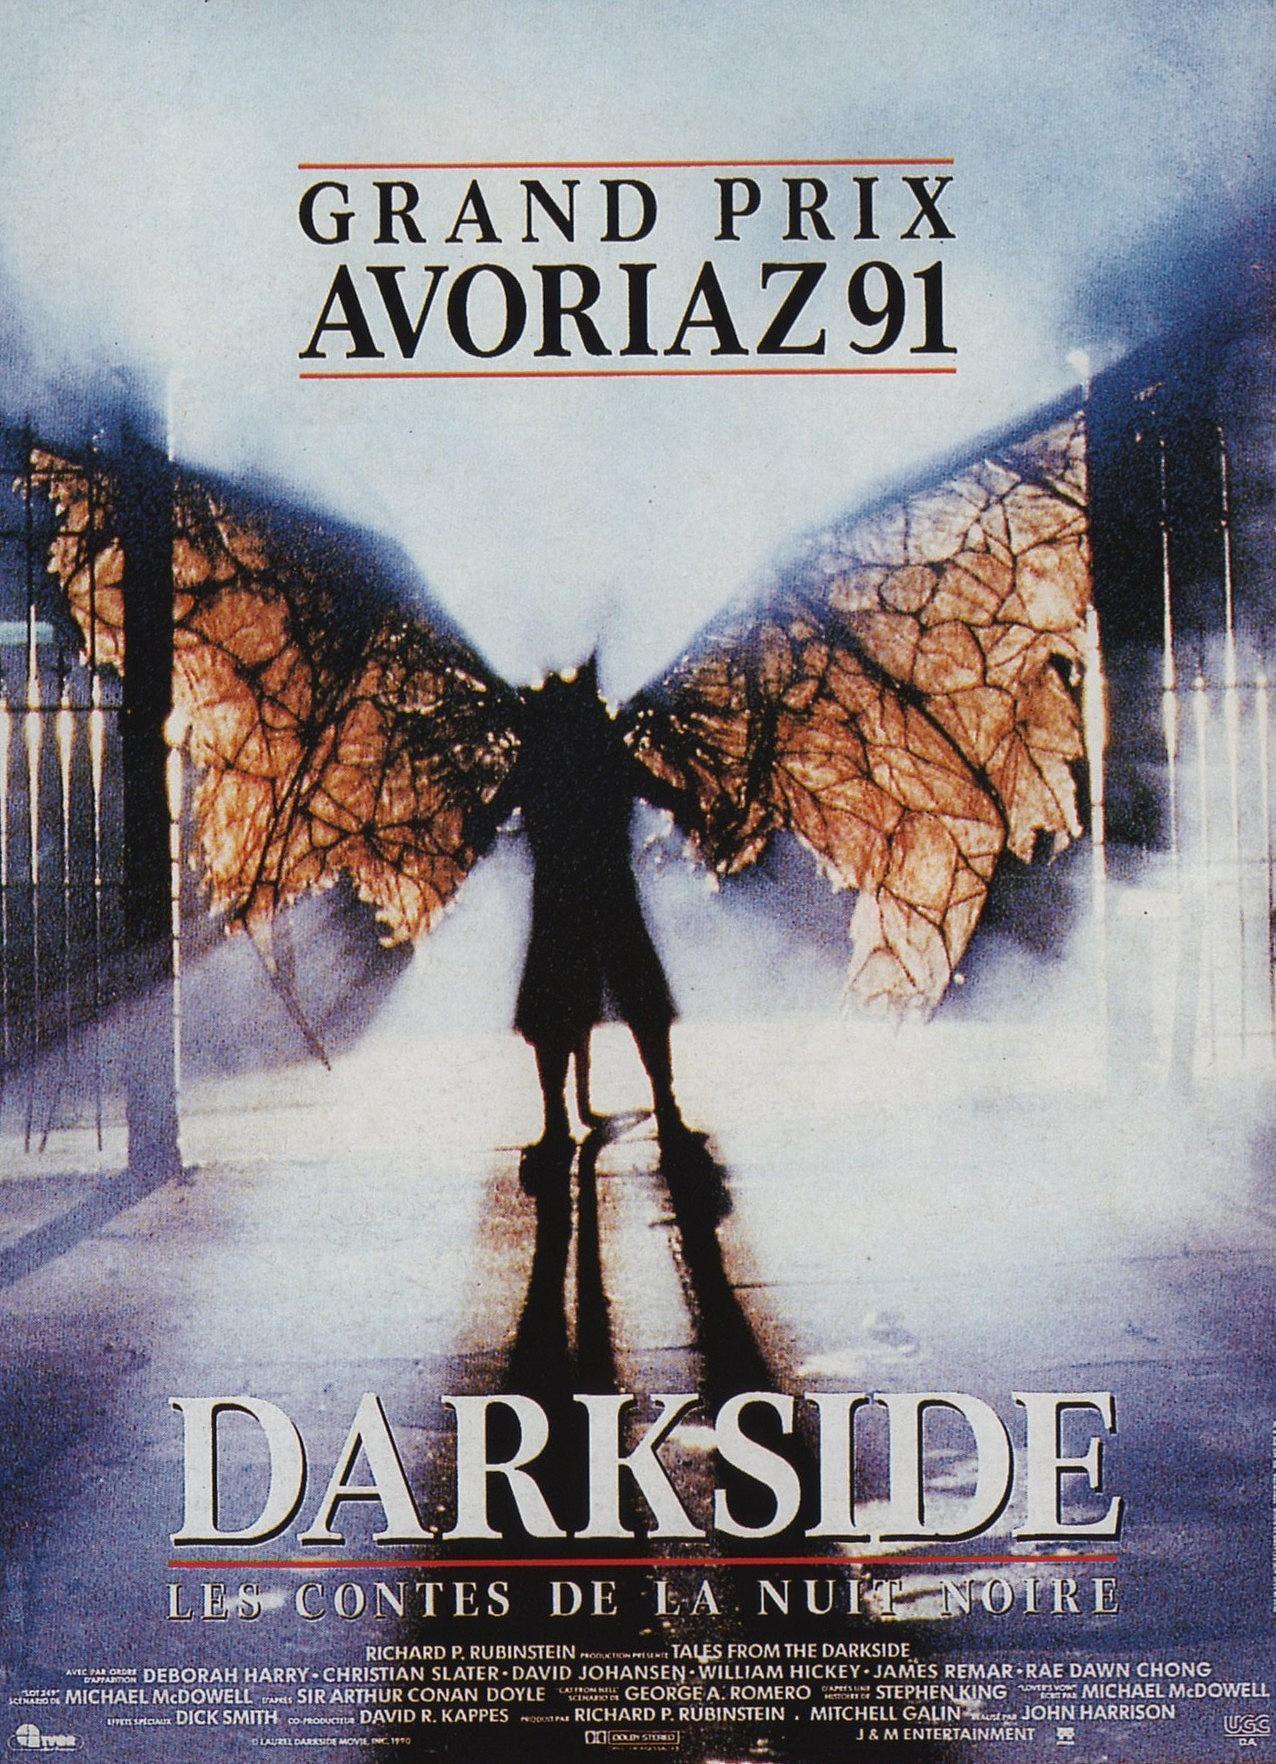 Постер фильма Сказки с темной стороны | Tales from the Darkside: The Movie